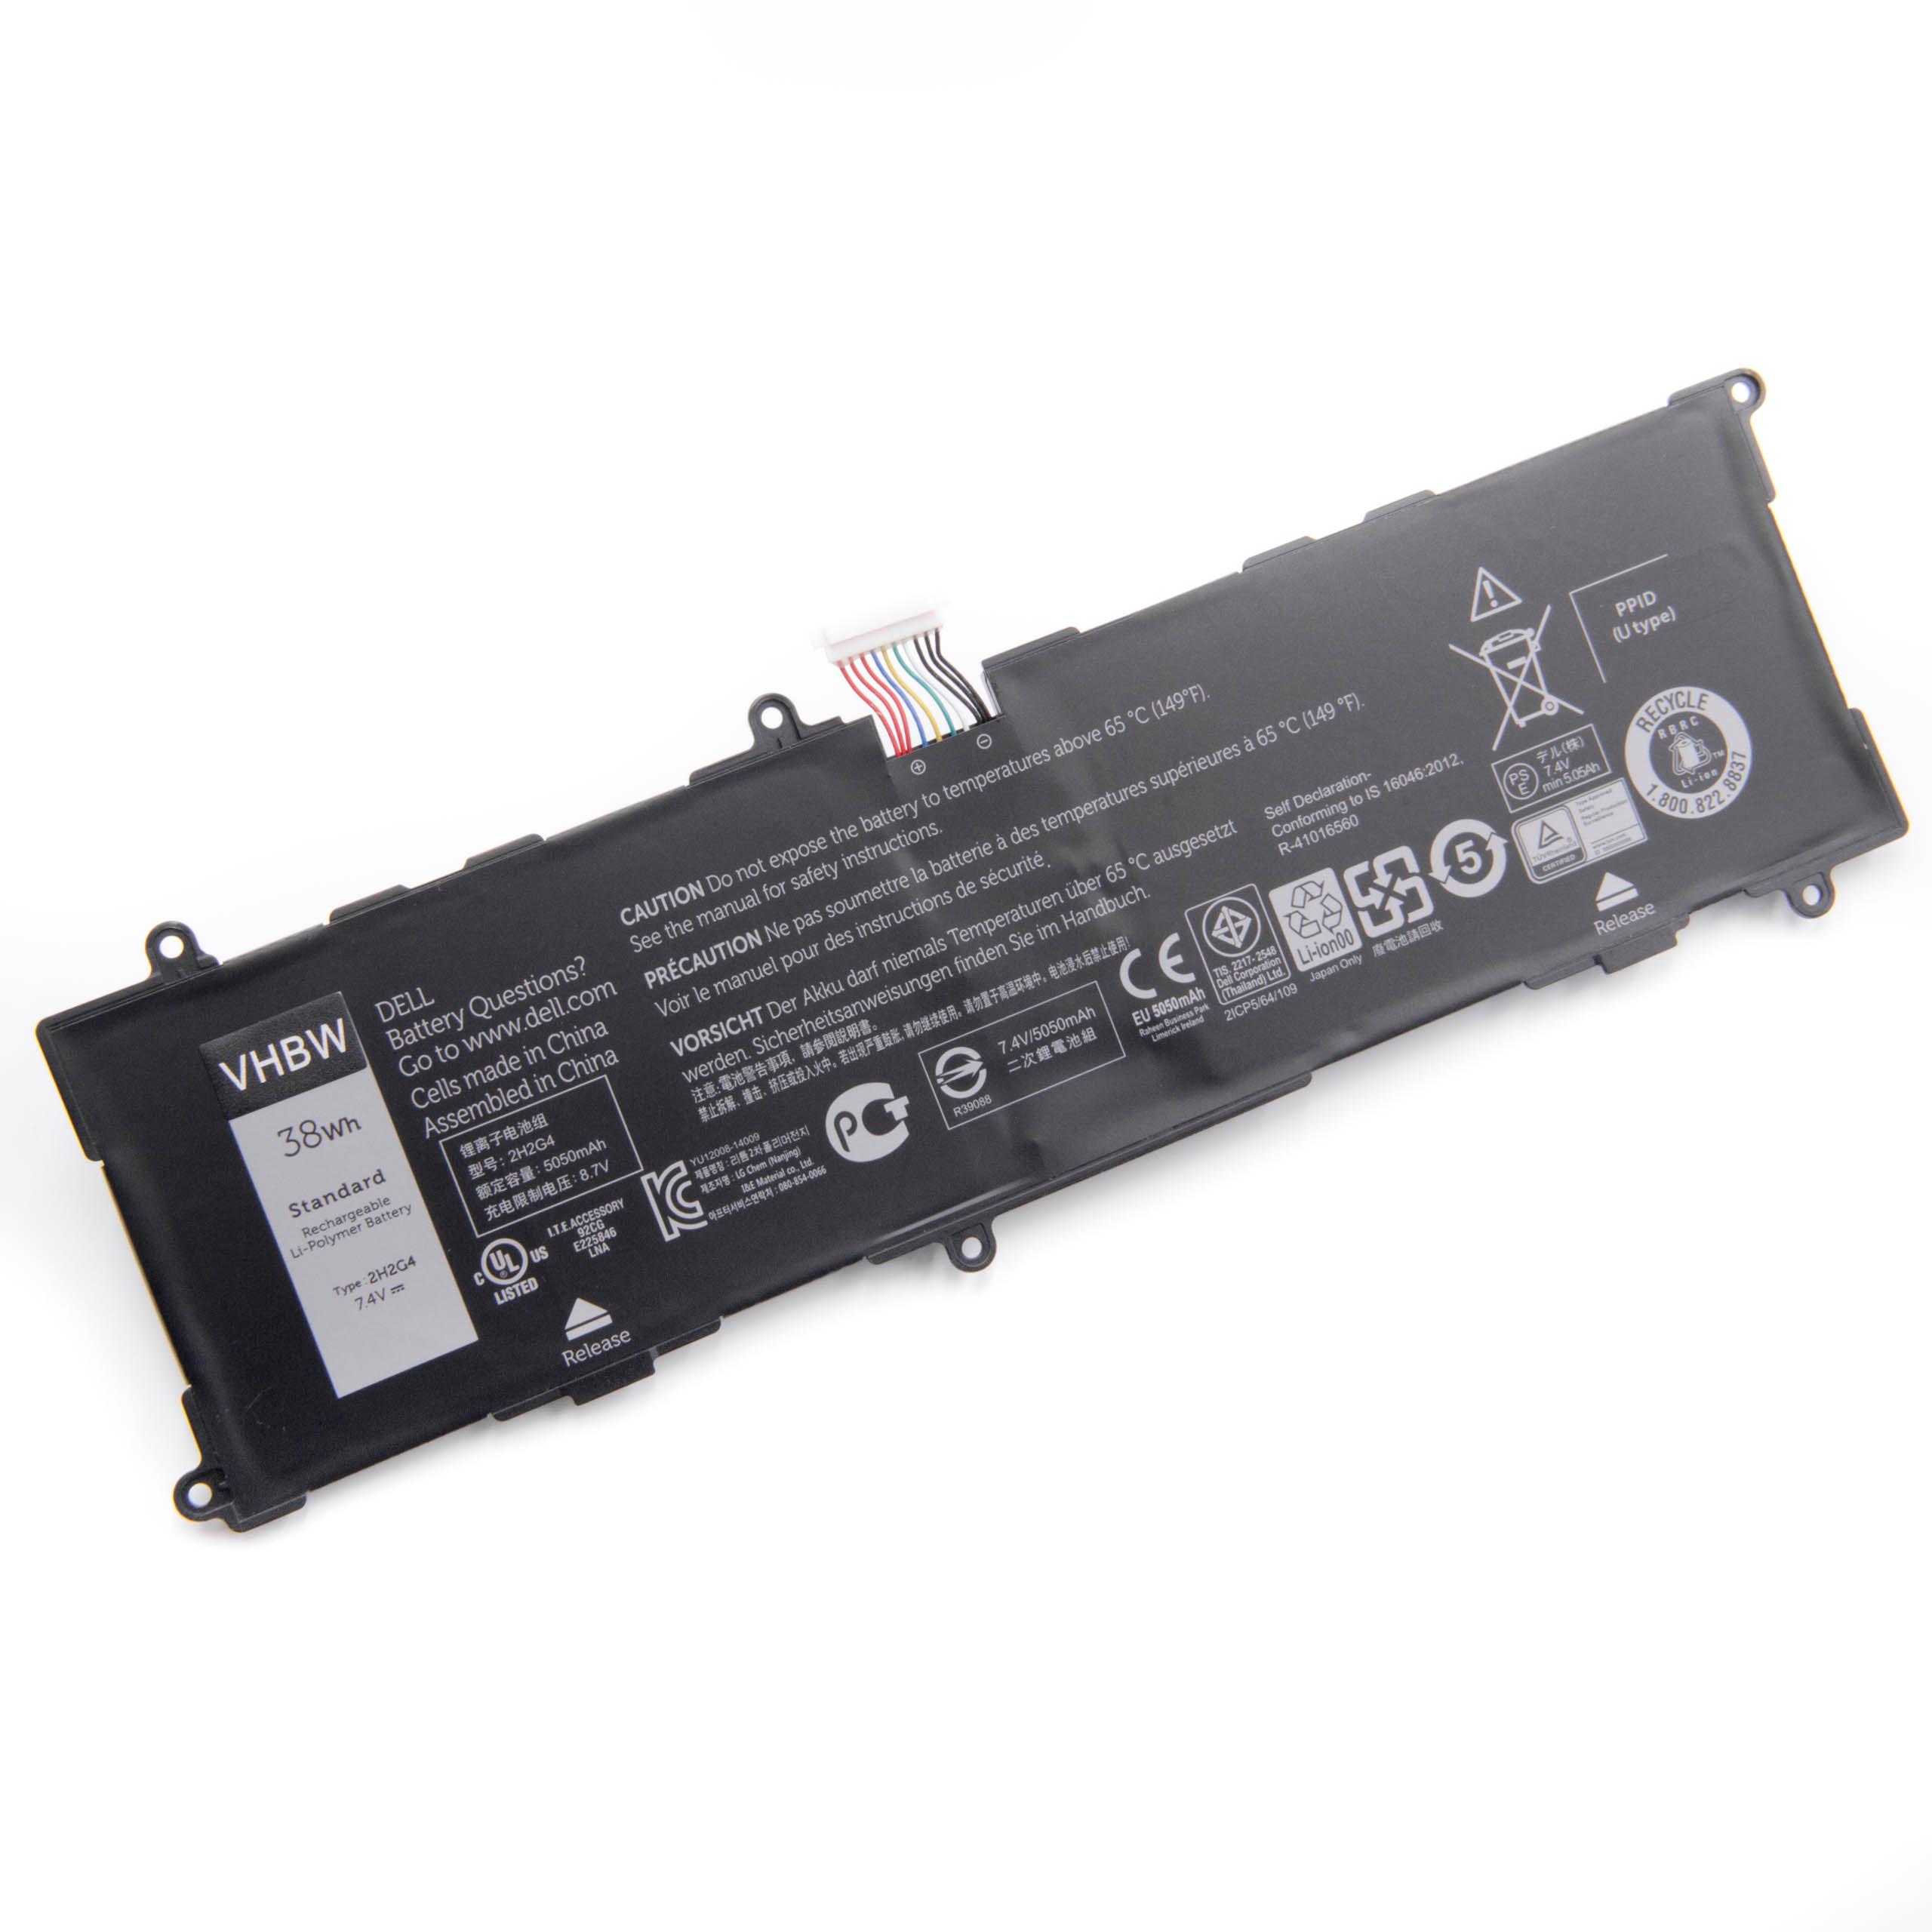 Akumulator zamiennik Dell TXJ69, 2H2G4 21CP5/63/105, HFRC3, 2H2G4 - 5100 mAh 7,4 V LiPo